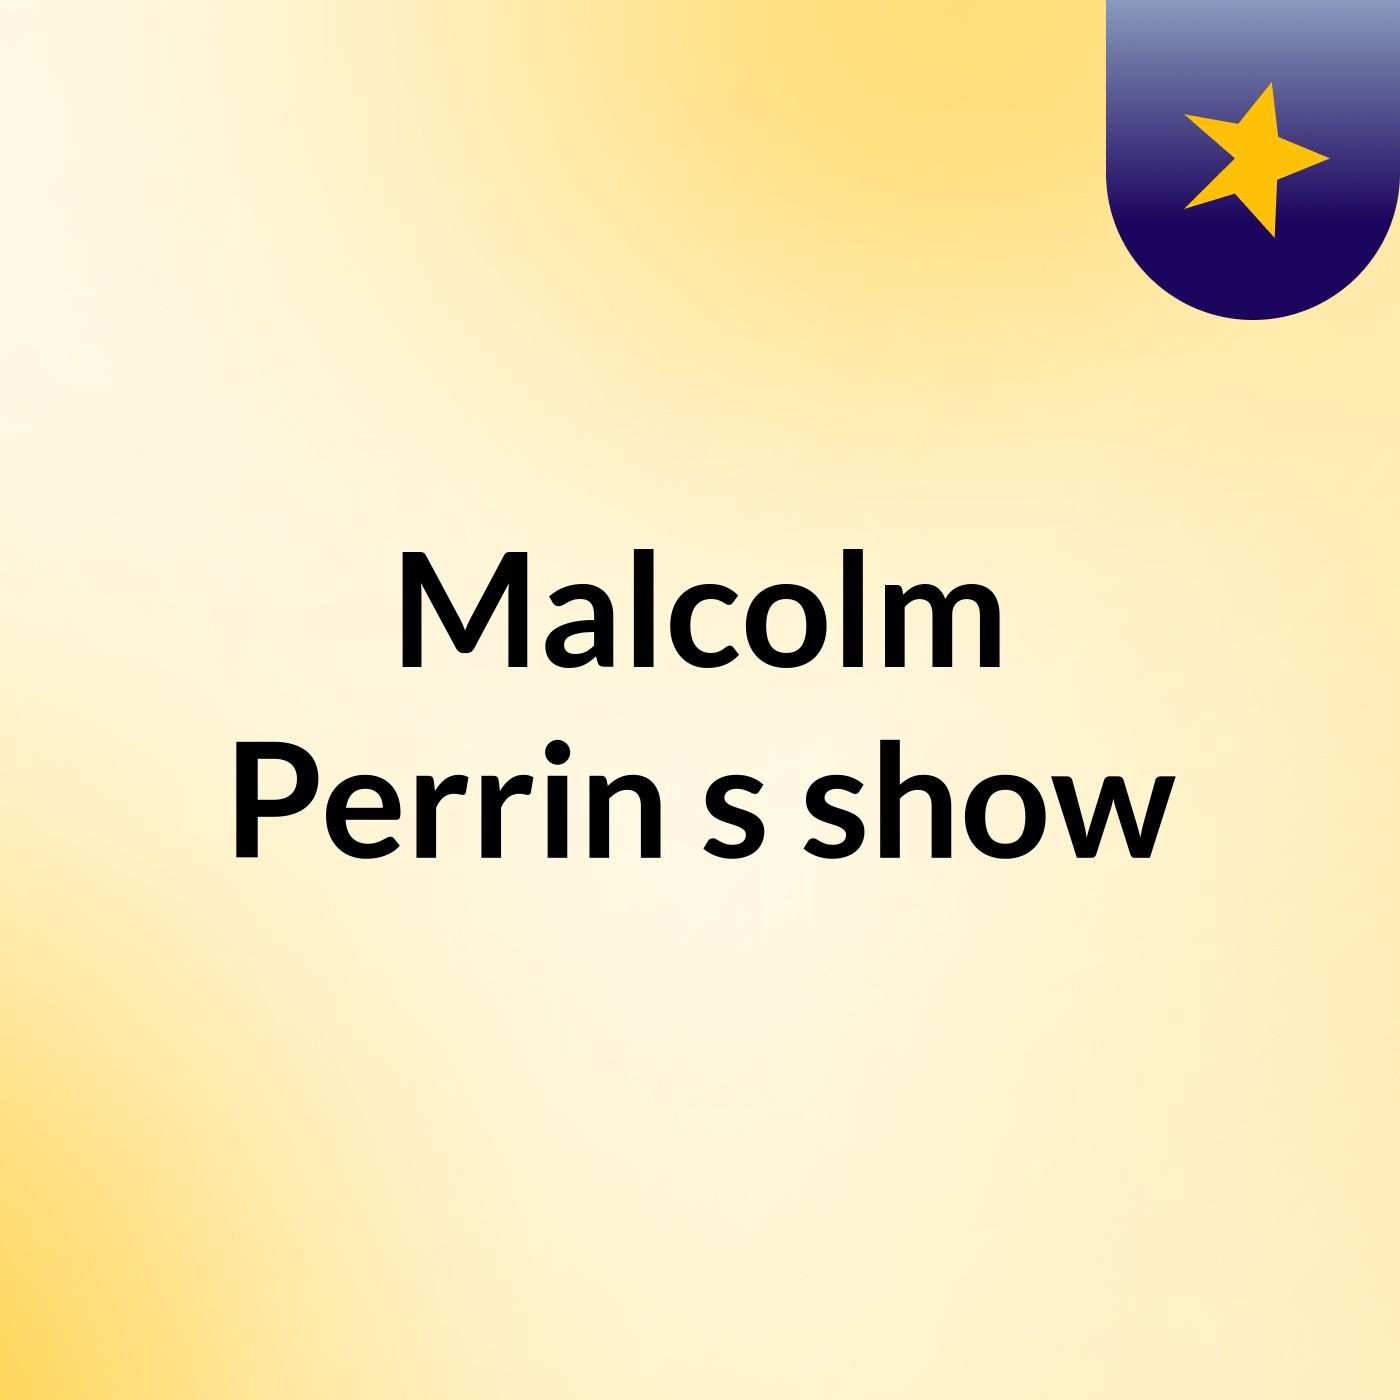 Malcolm Perrin's show